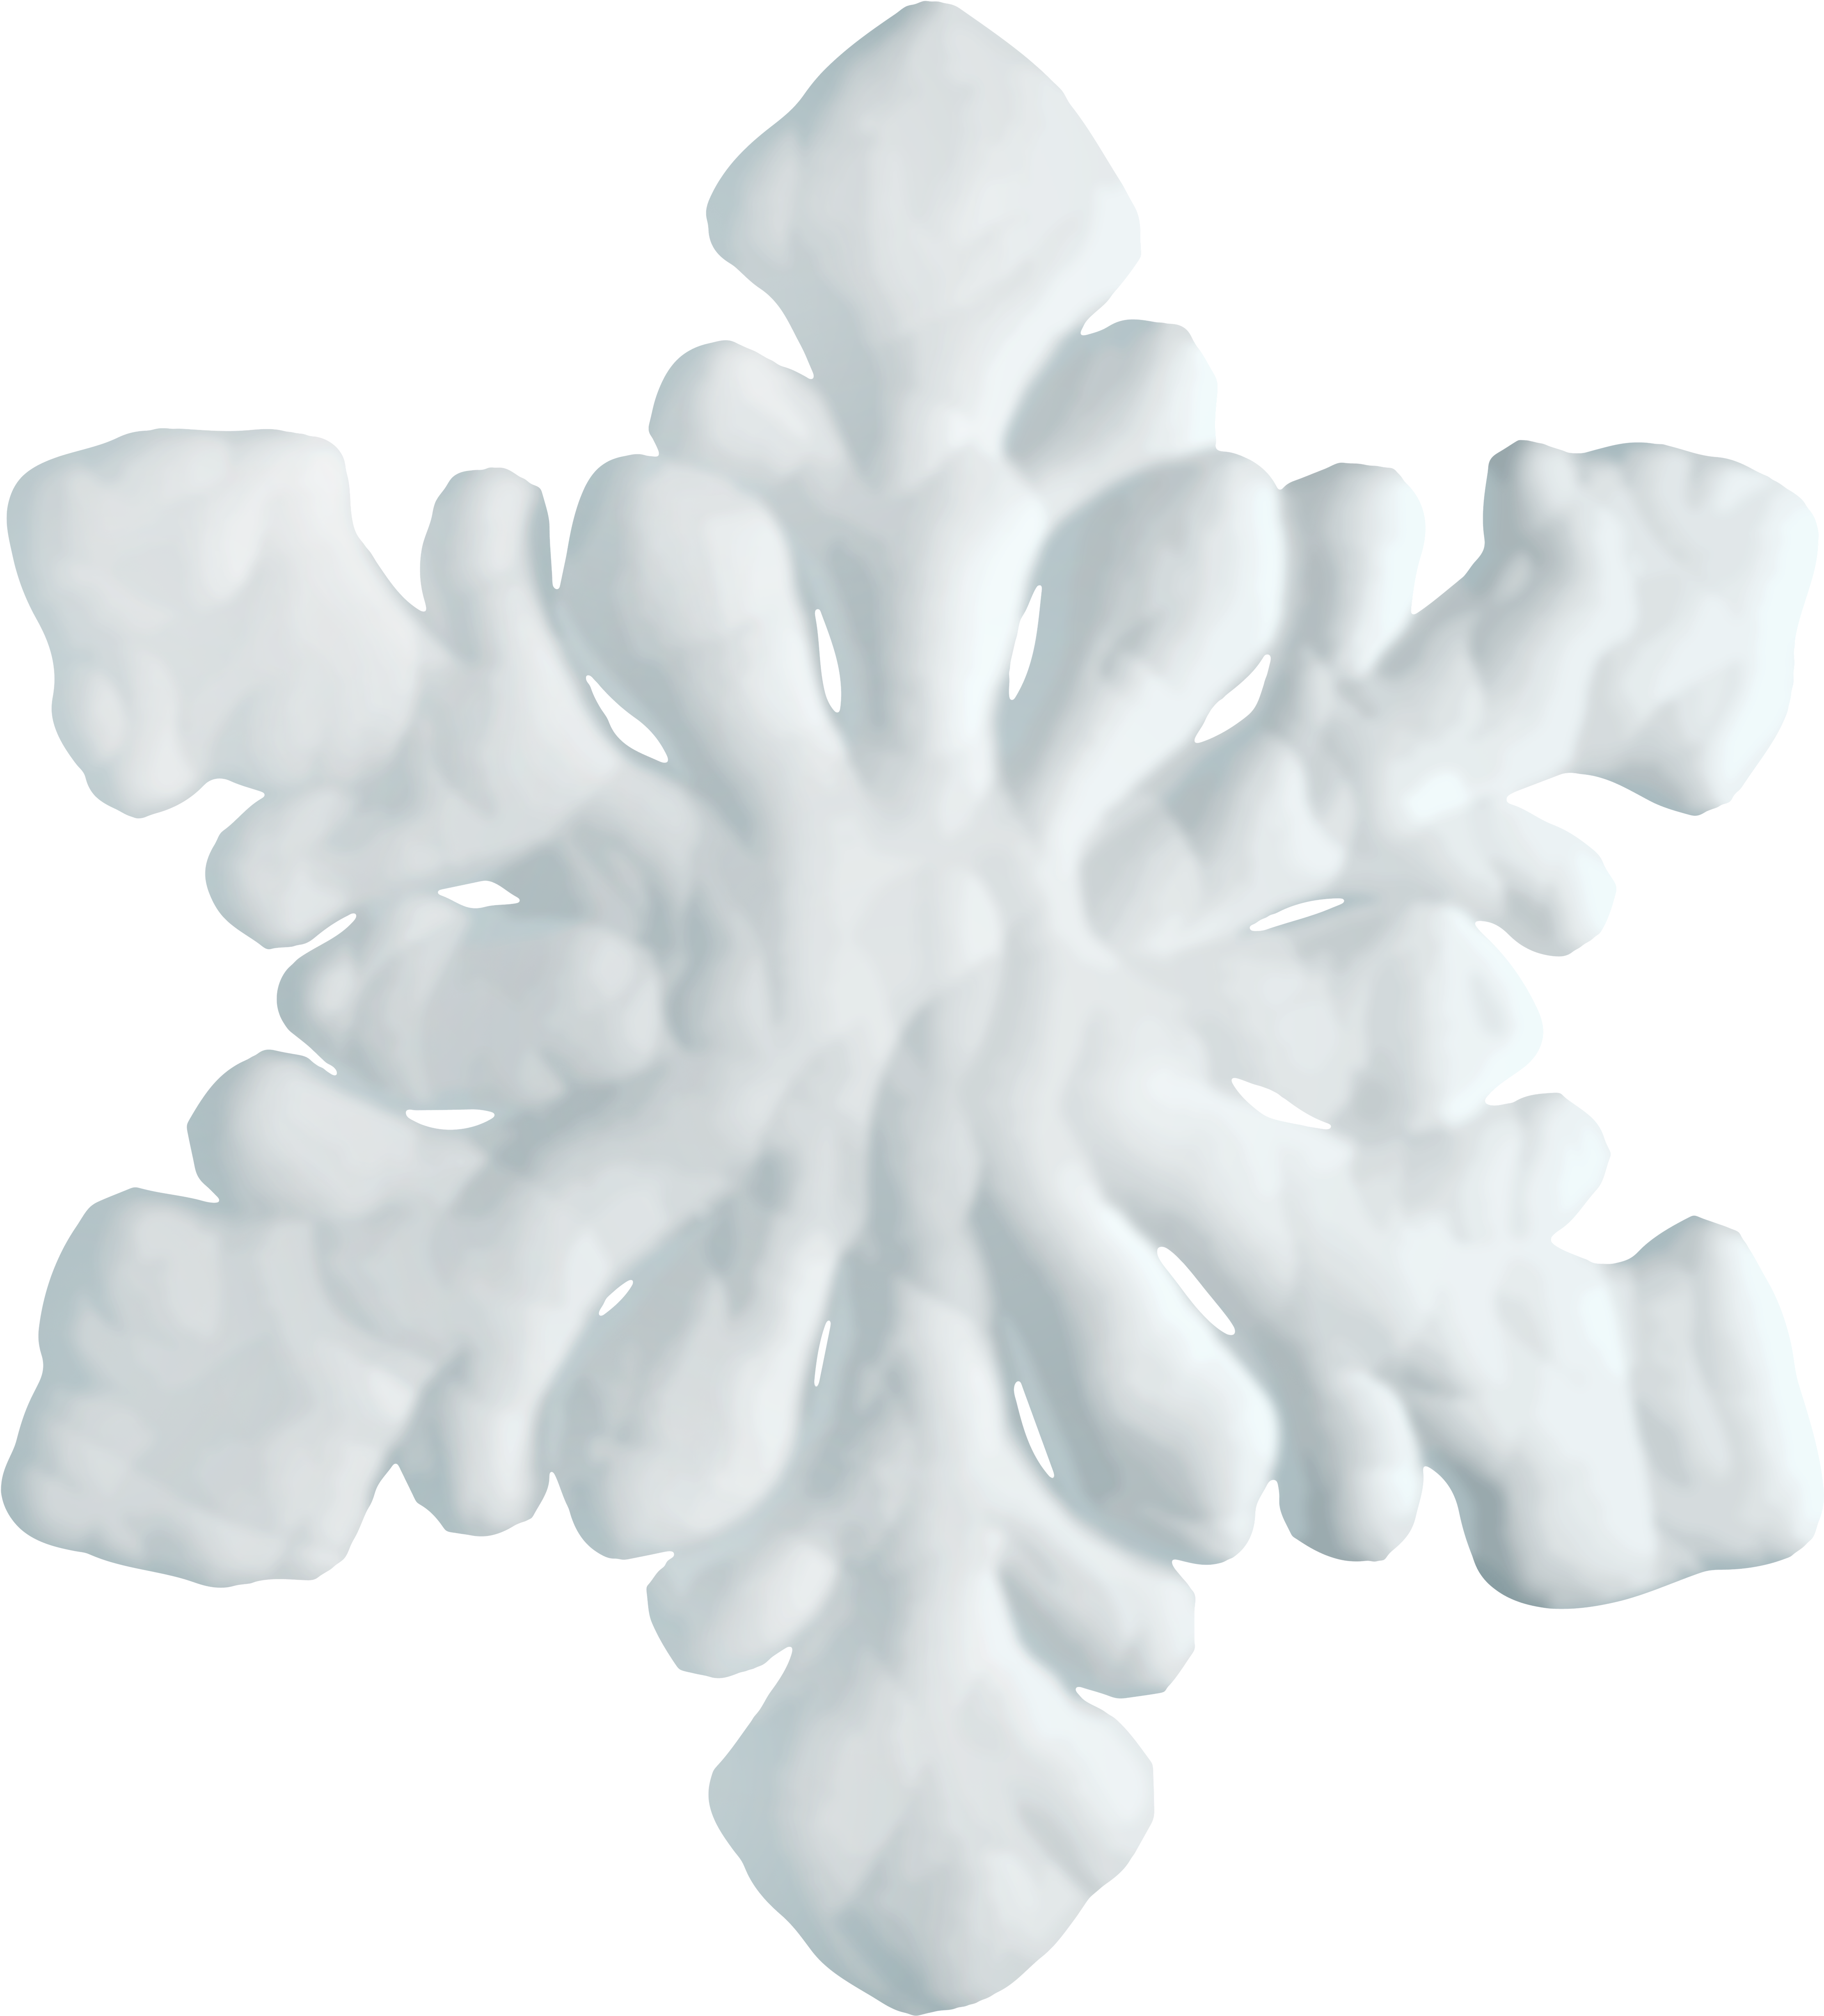 A White Snowflake On A Black Background